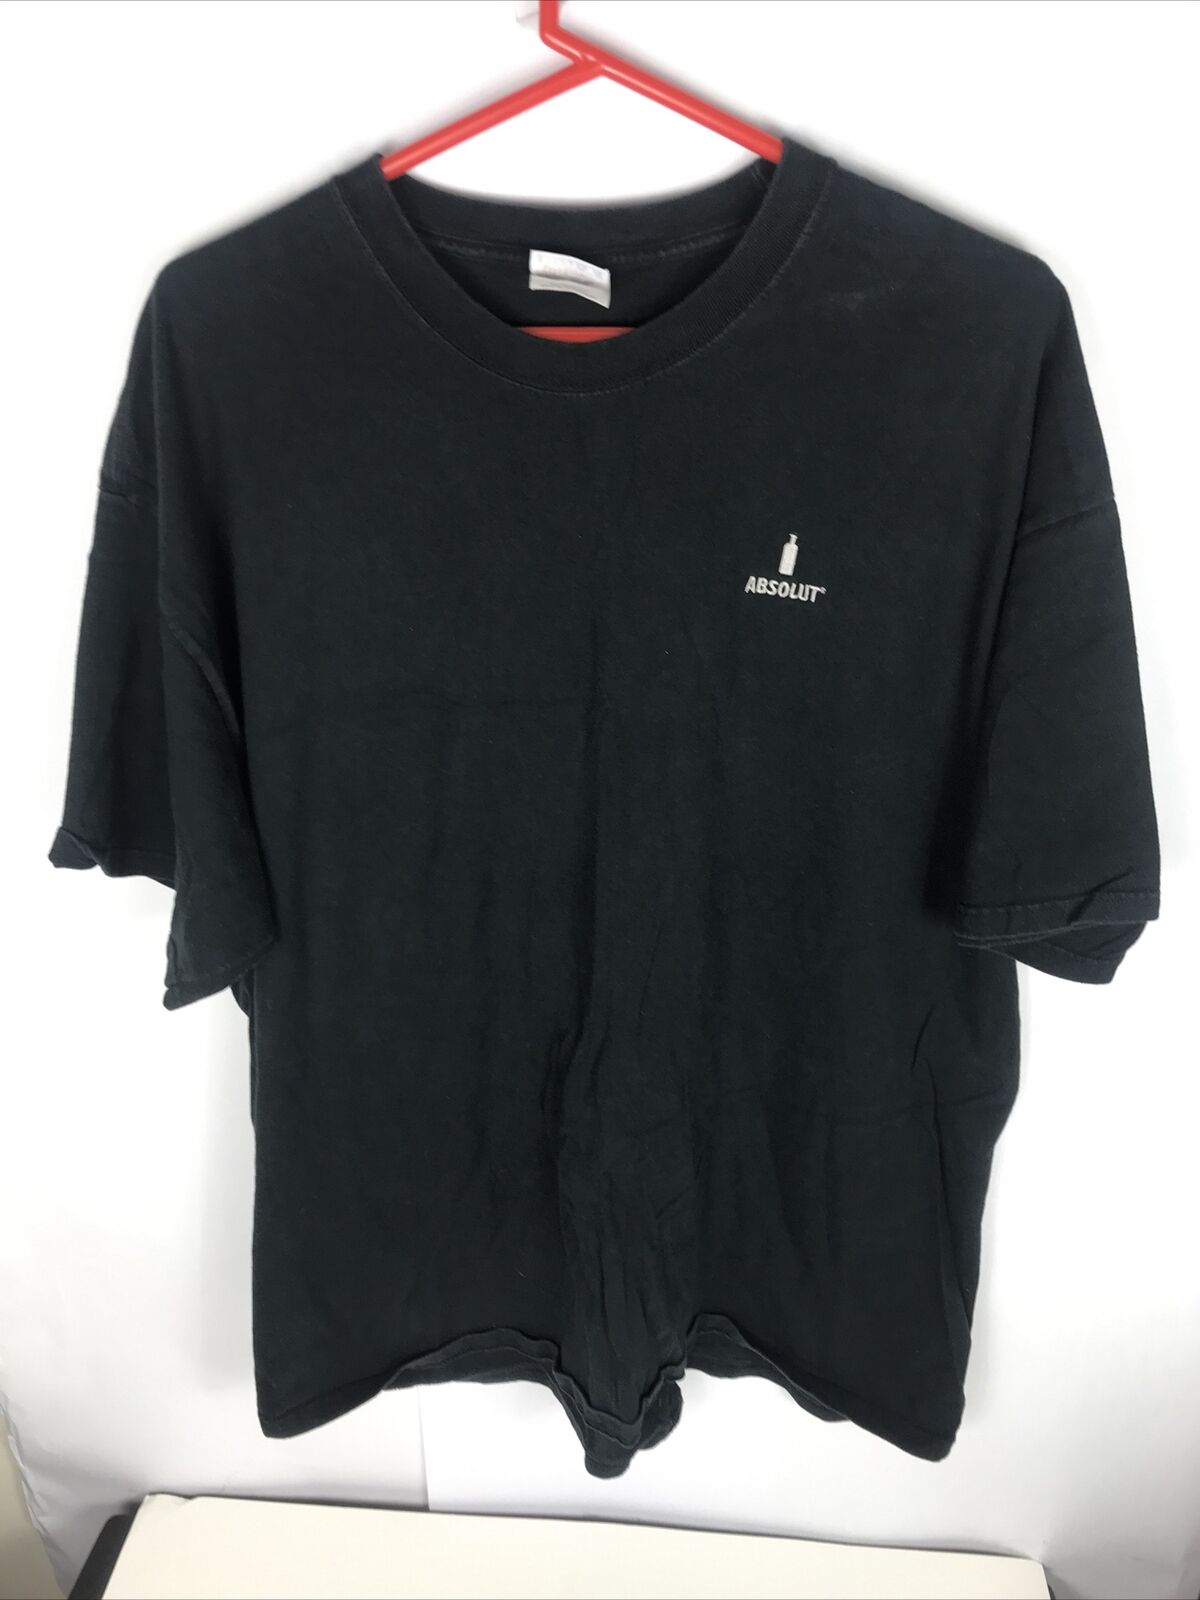 ABSOLUT VODKA Promo T Shirt Black Embroidered Logo Rare Mens Sz 2XL